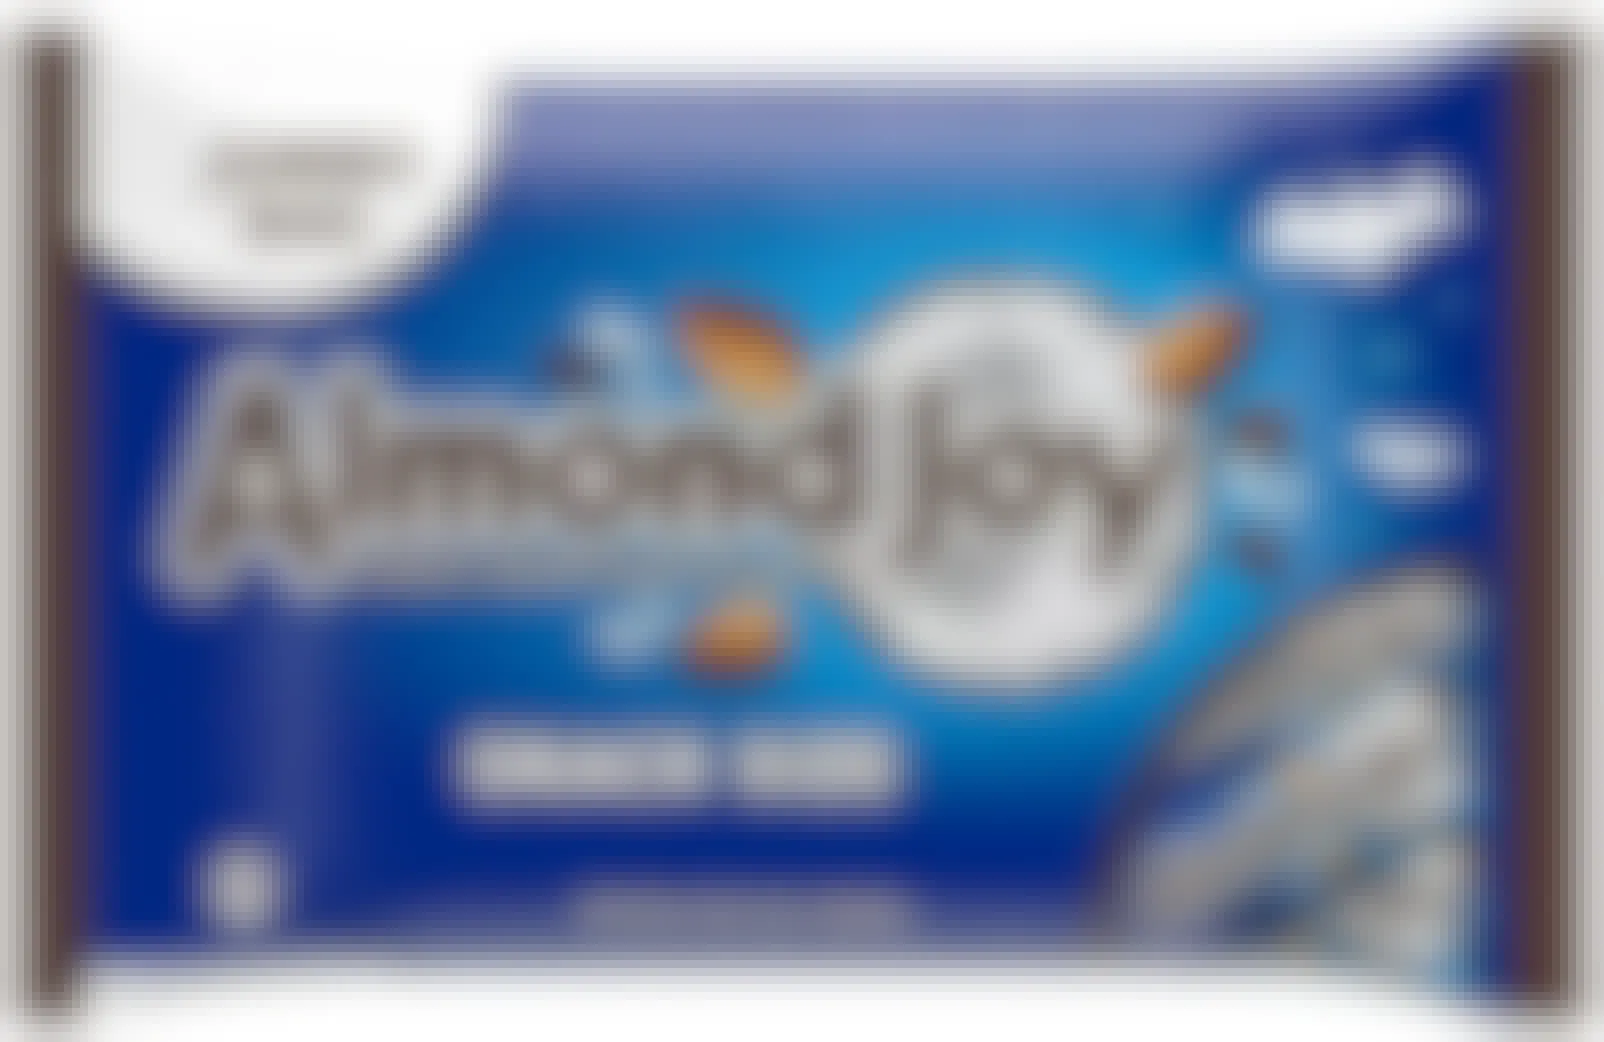 Almond Joy snack size candy bar package.